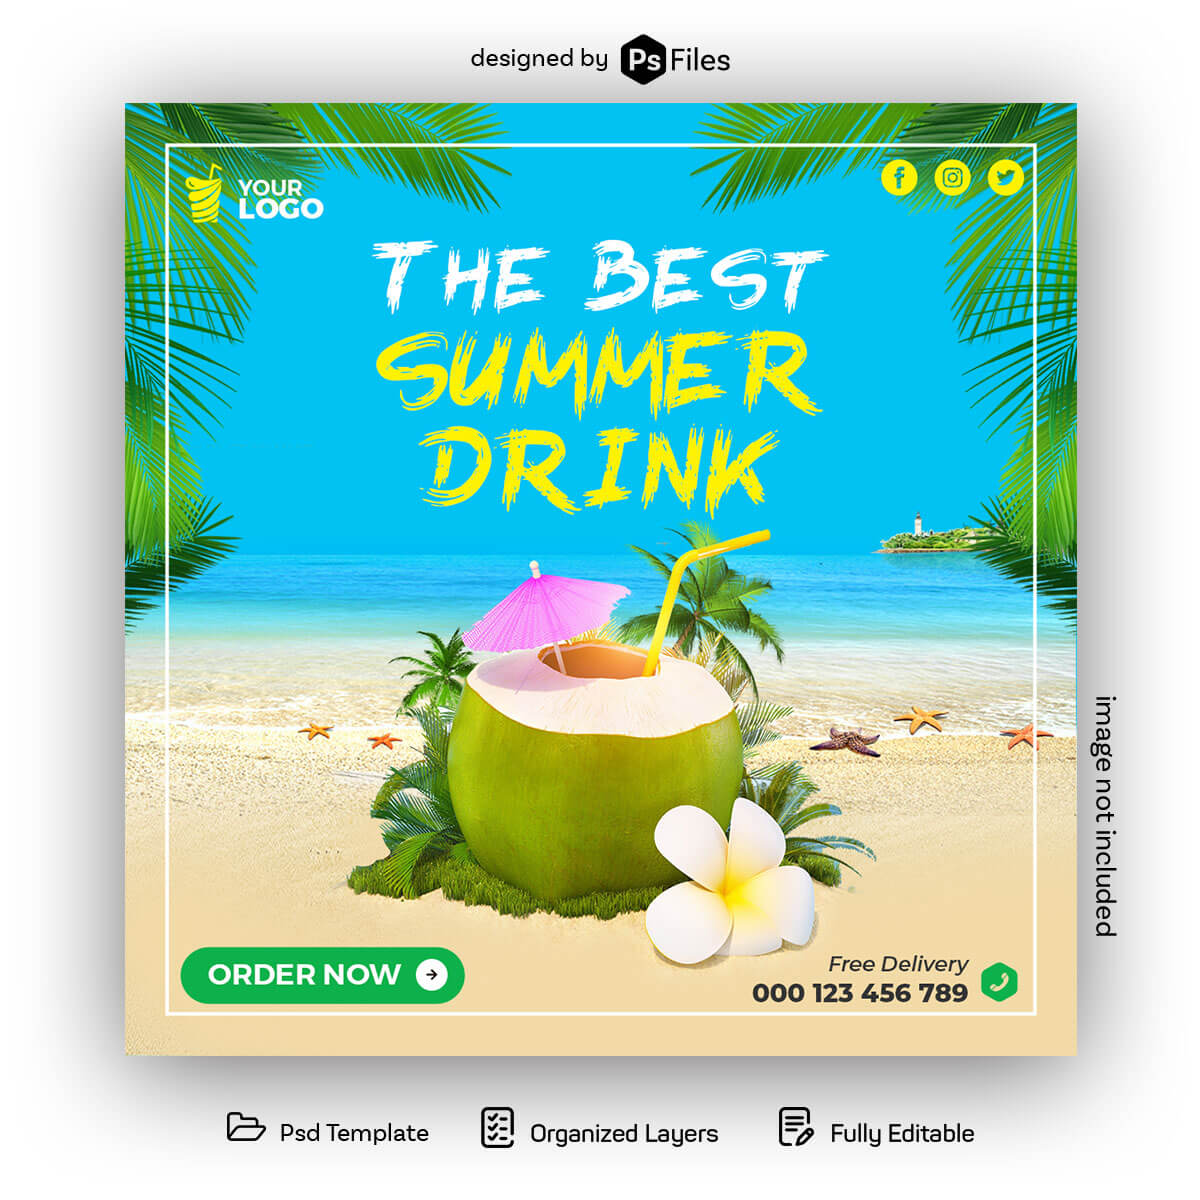 The Best Summer Drink Coconut Water Juice Instagram Promo Design PSD Template Free Download